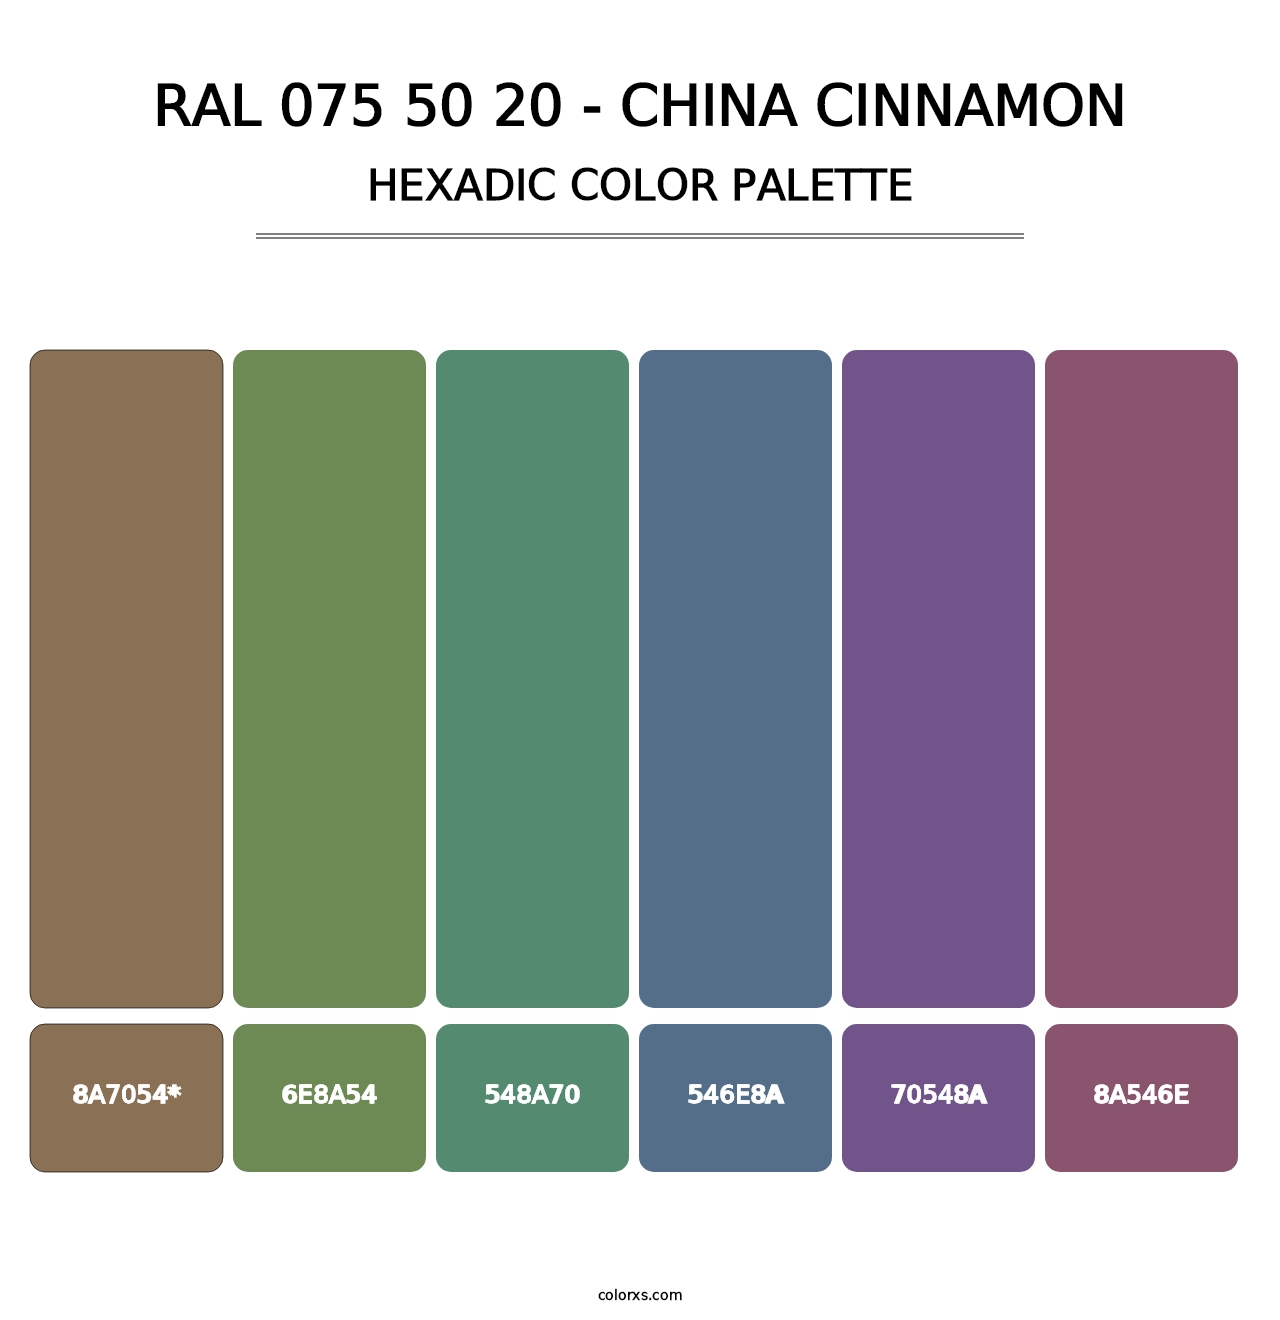 RAL 075 50 20 - China Cinnamon - Hexadic Color Palette